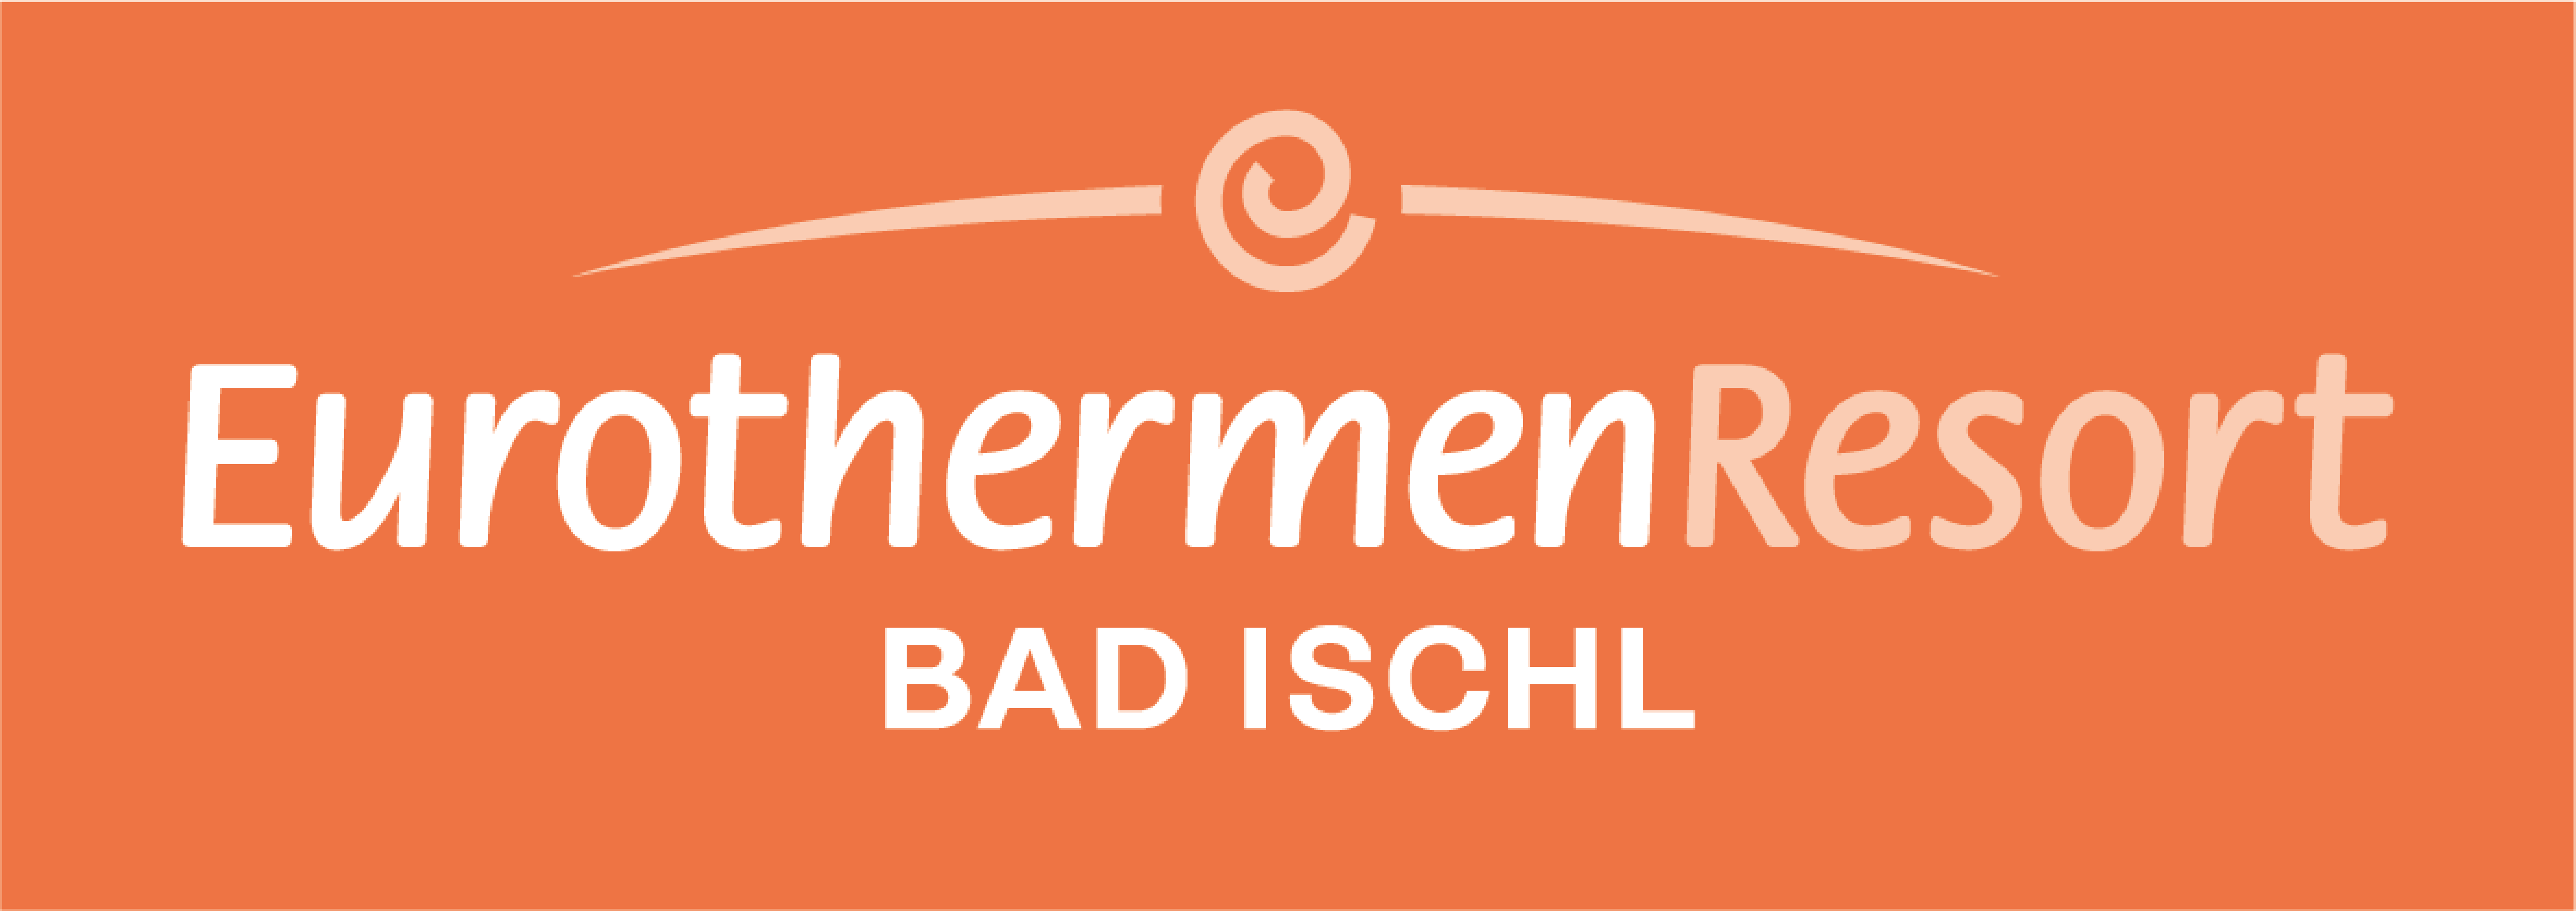 EurothermenResort Bad Ischl GmbH & Co KG